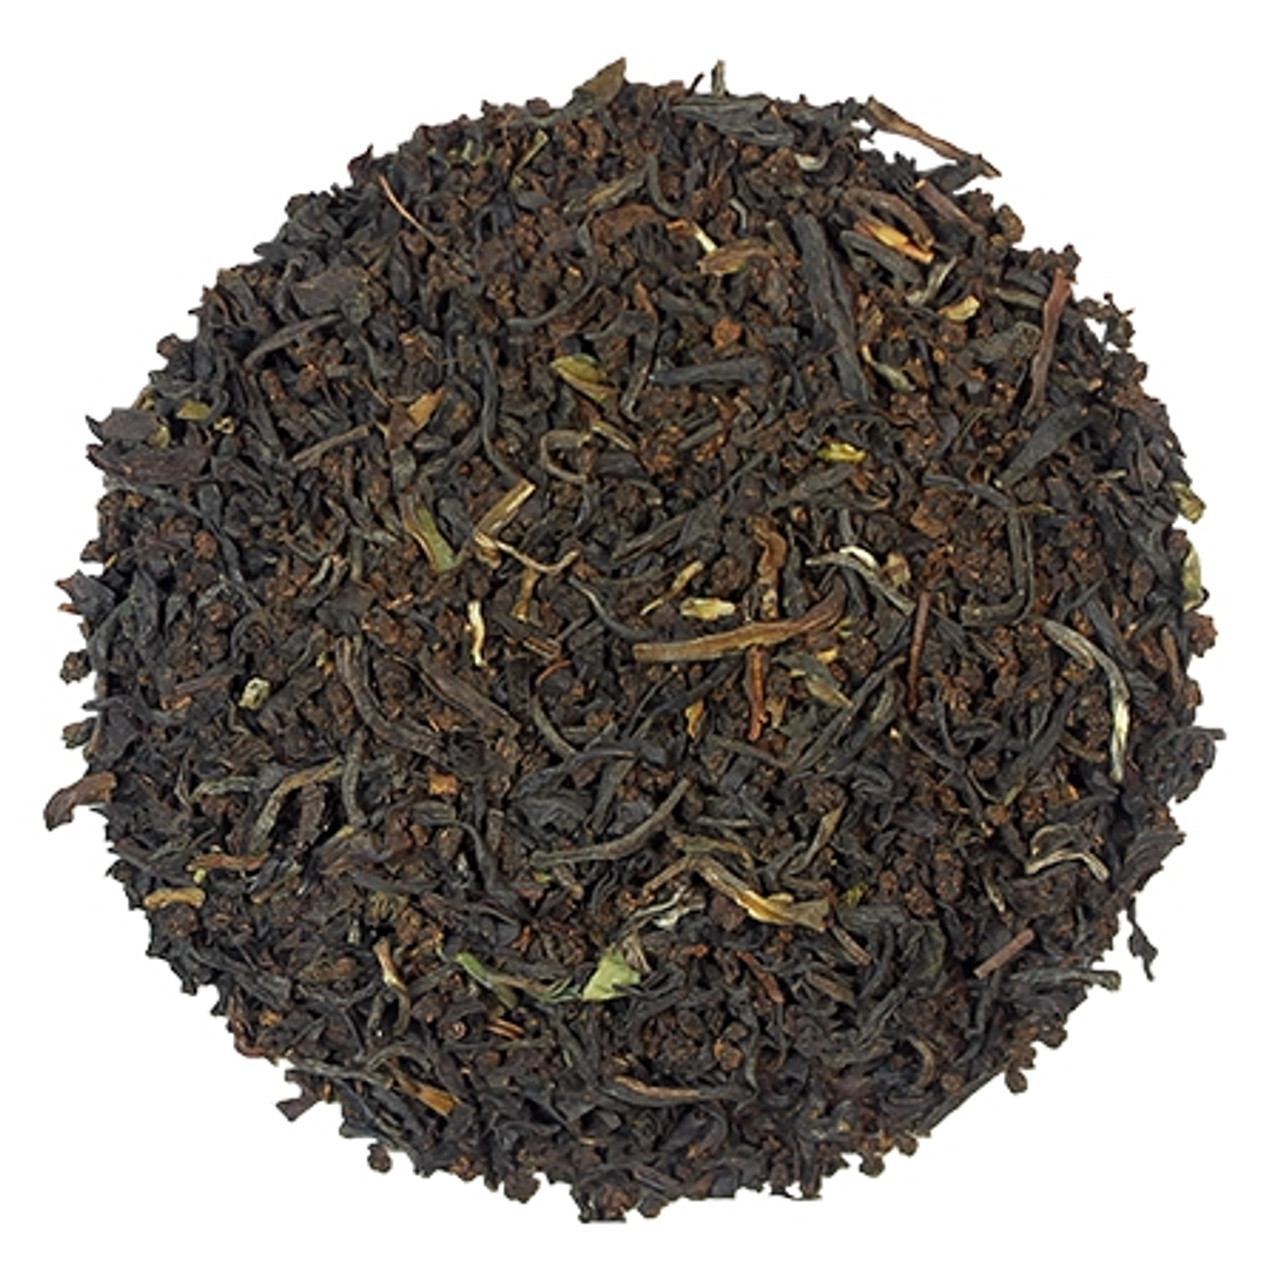 an image of the loose leaf tea displayed